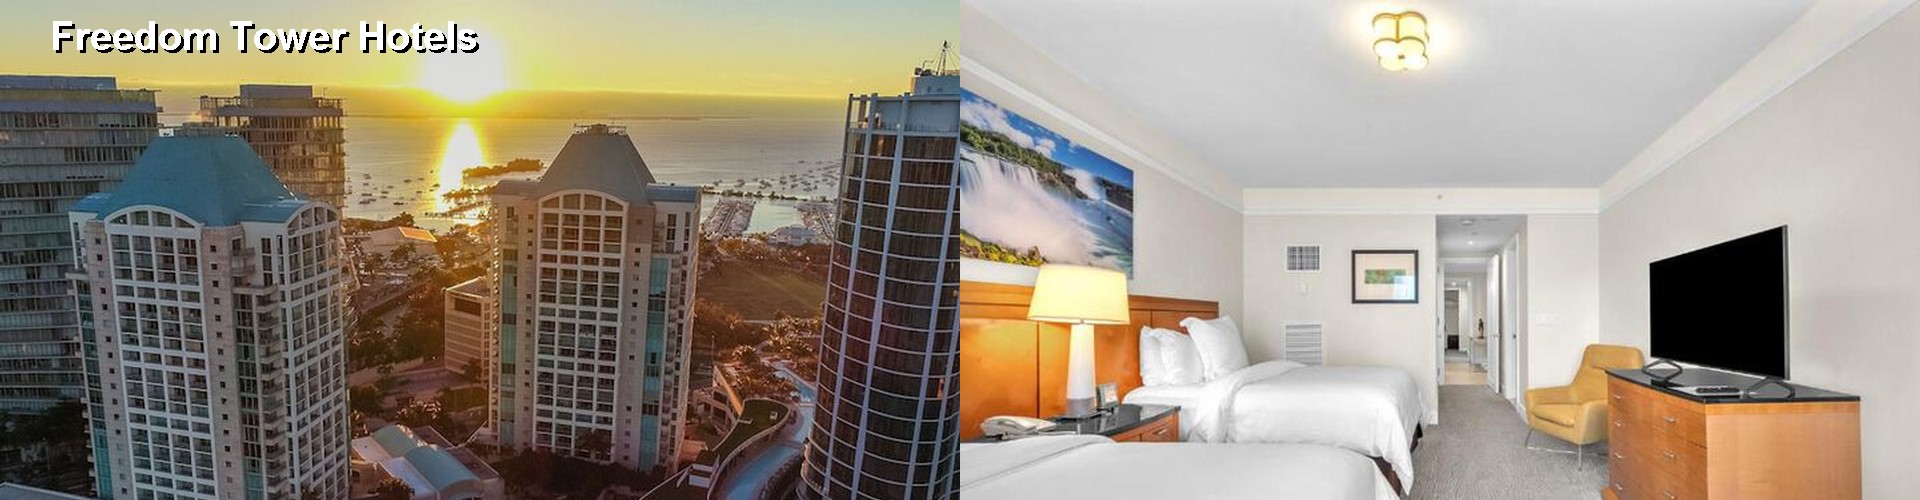 3 Best Hotels near Freedom Tower